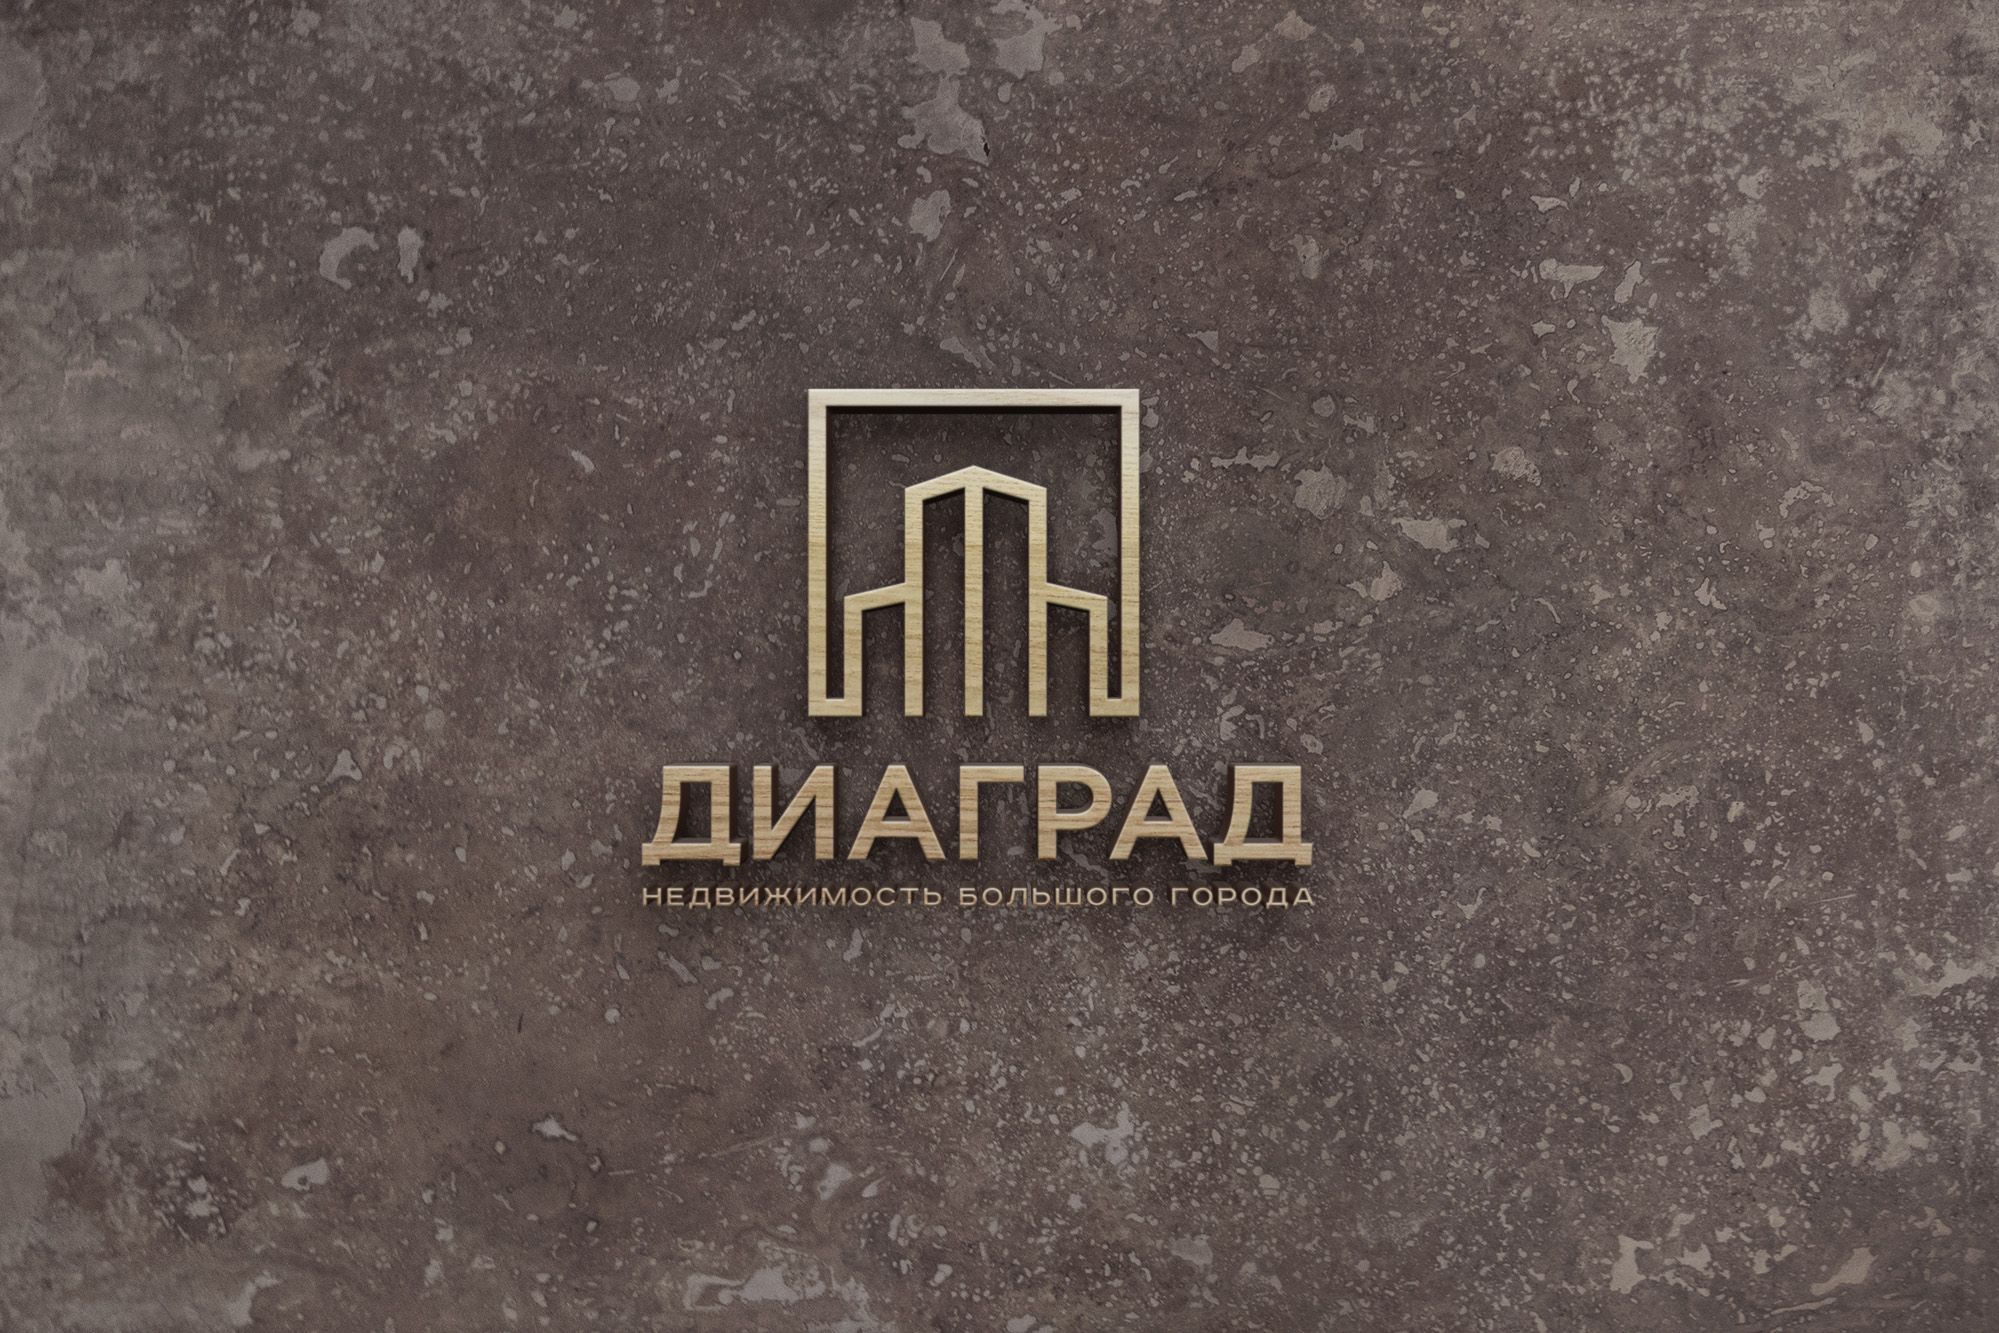 Логотип для Диаград - дизайнер U4po4mak